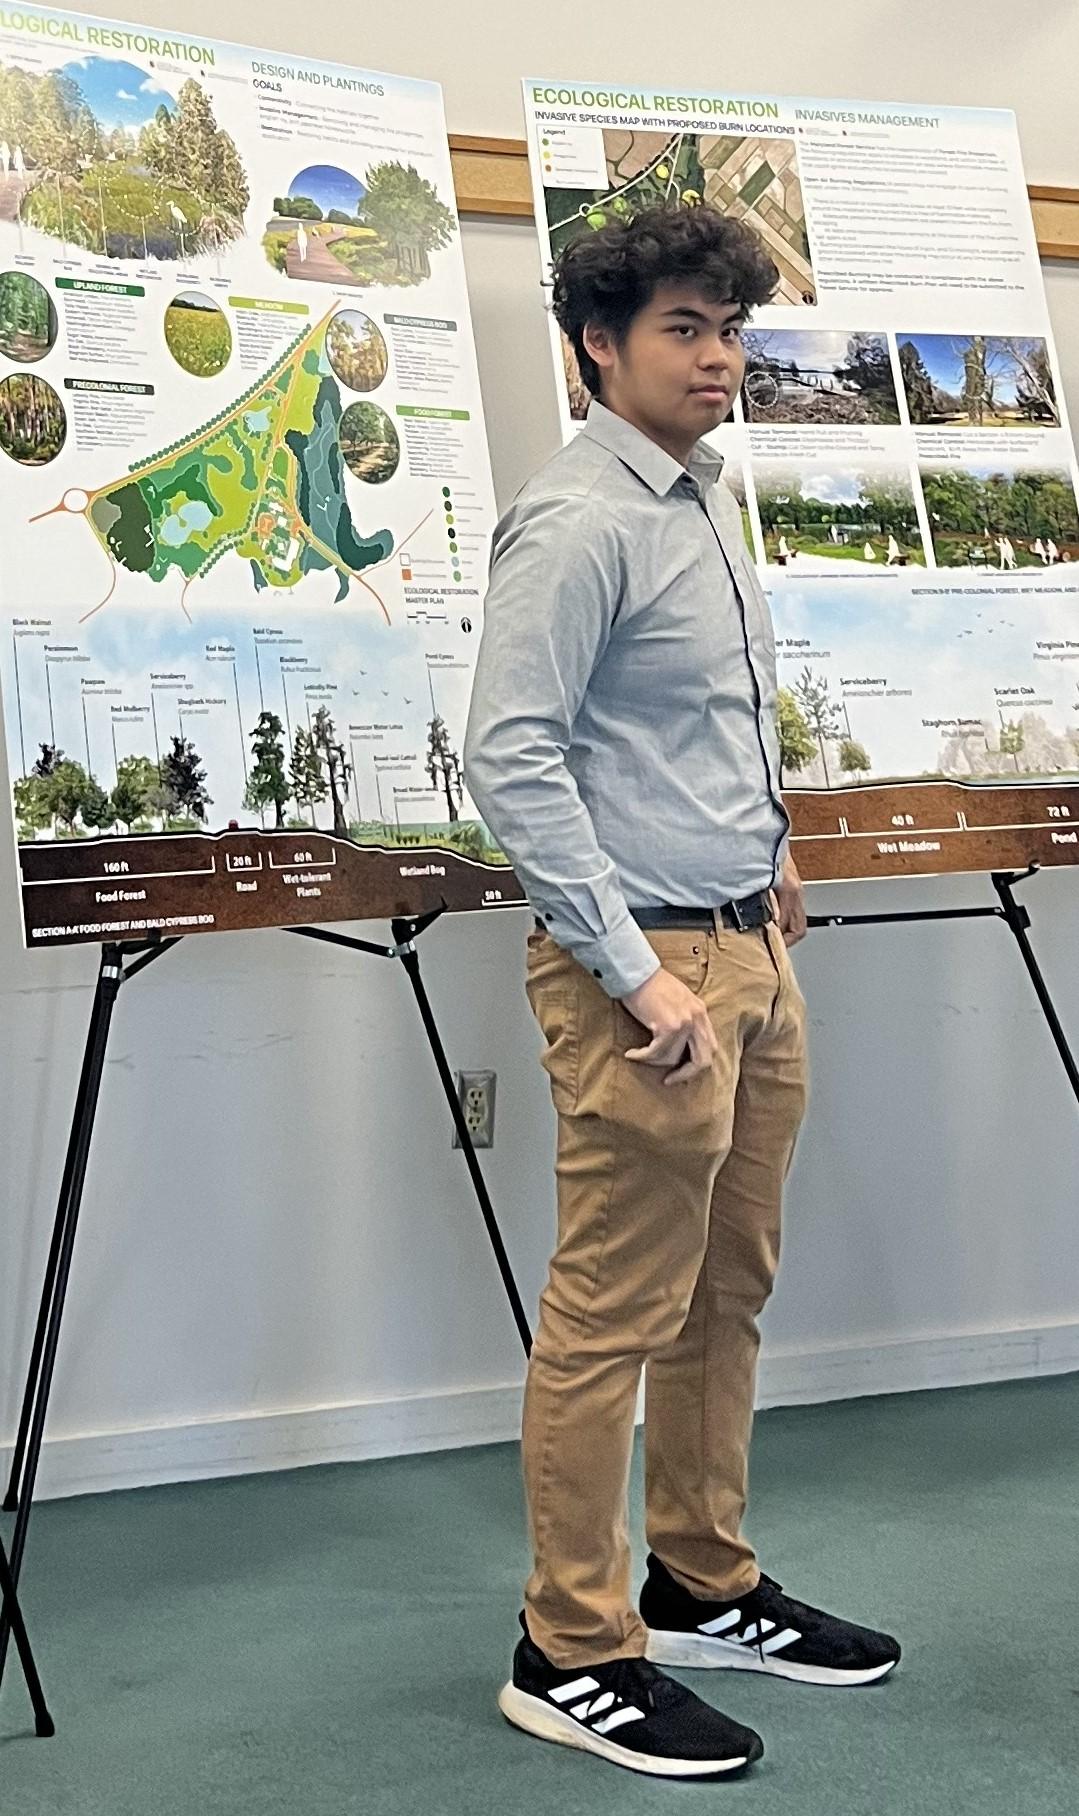 Student presenting scientific poster involving urban design.